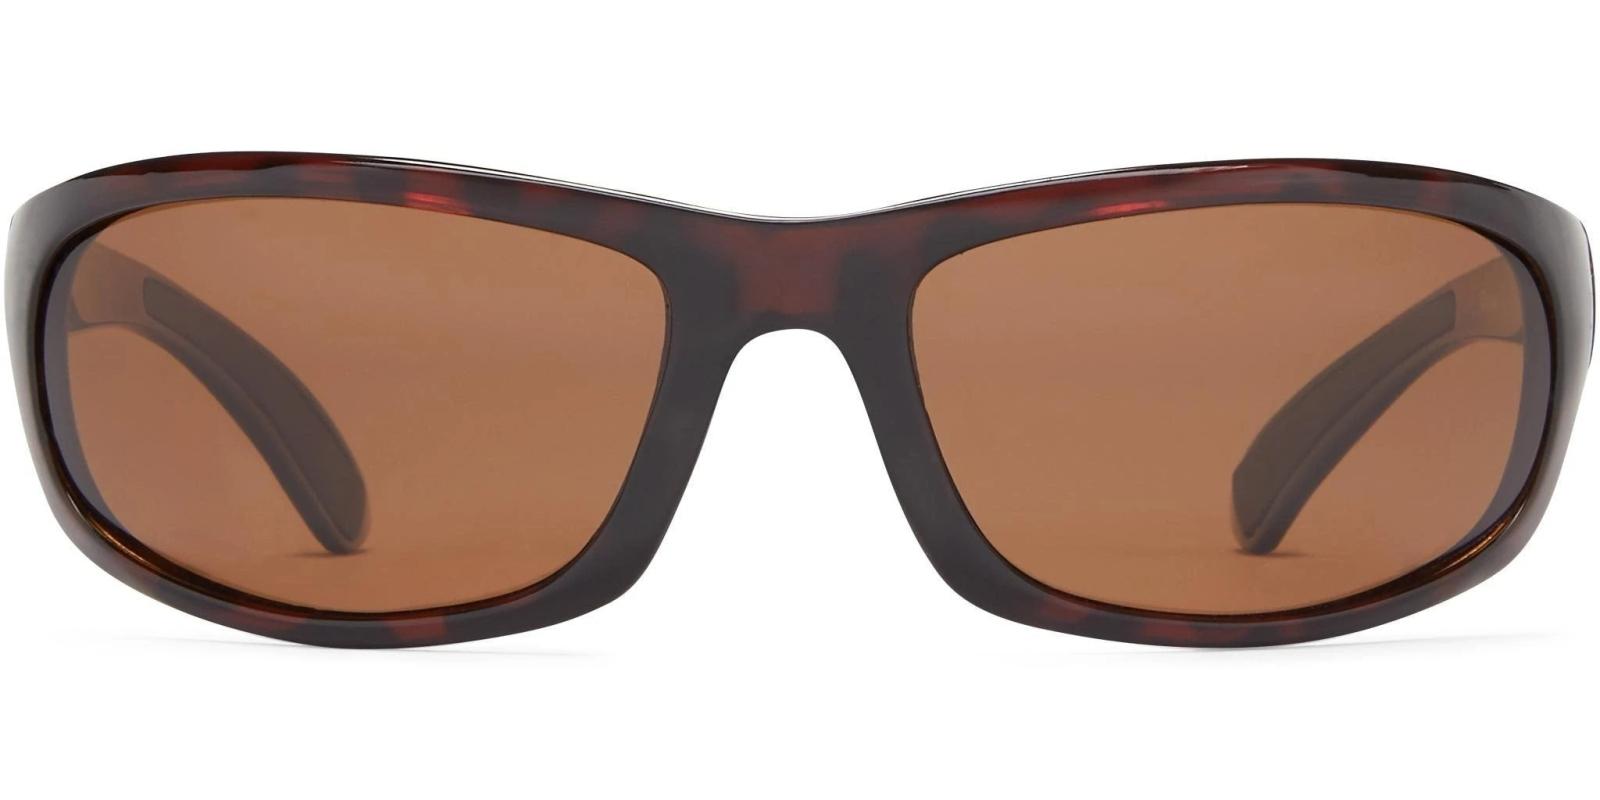 icu Eyewear Permit Sunglasses